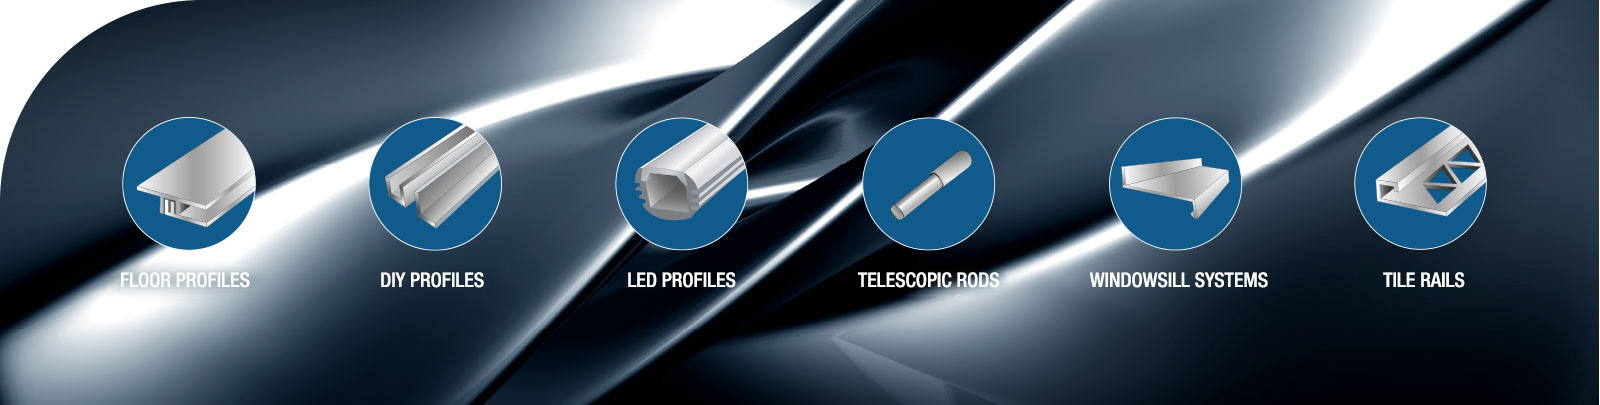 Floor profiles, DIY profiles, LED profiles, telescopic rods, windowsill systems, tile rails